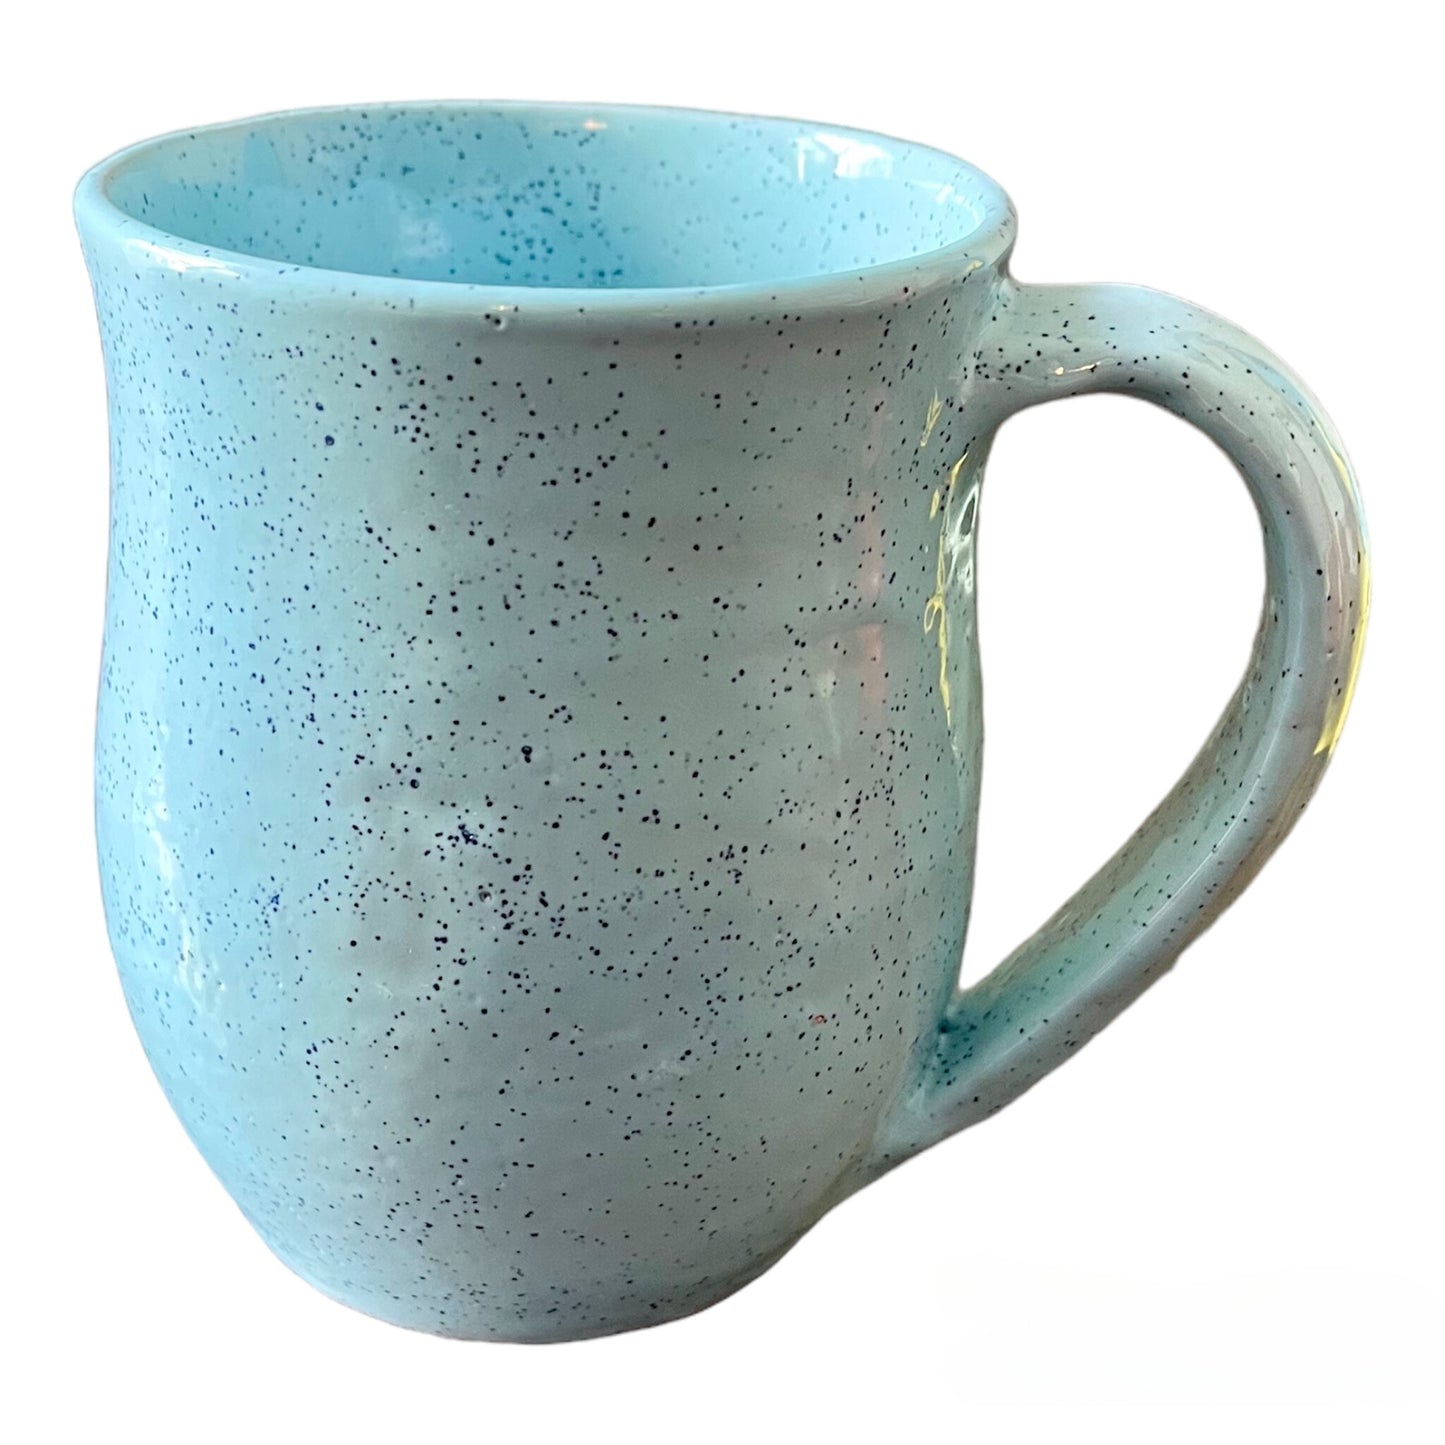 Speckled Clay Mug